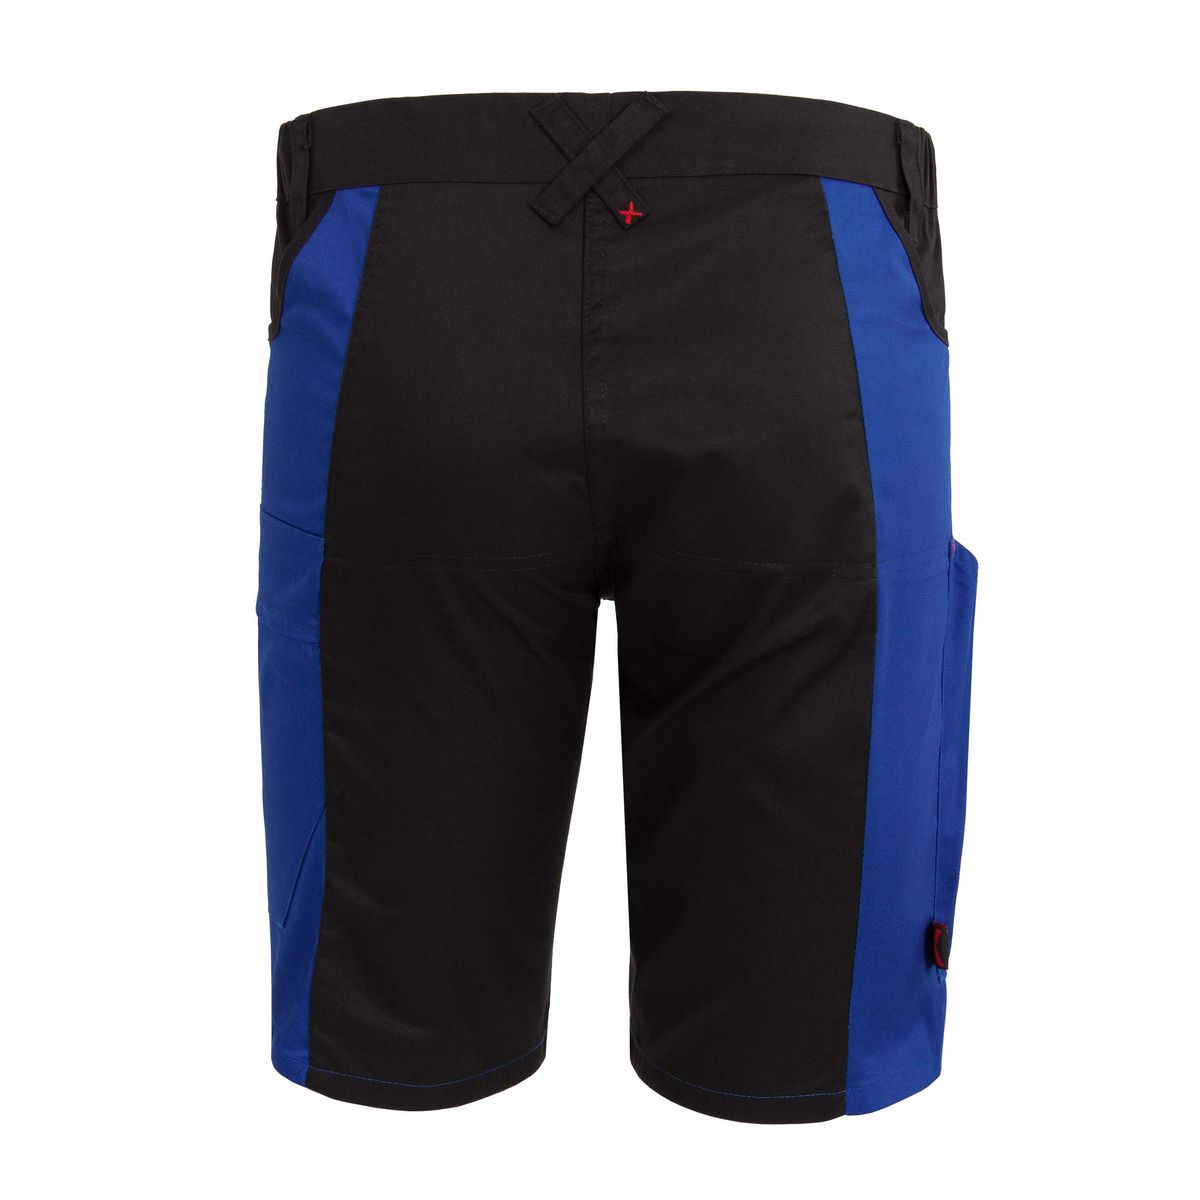 X-Serie Shorts kornblau/schwarz  